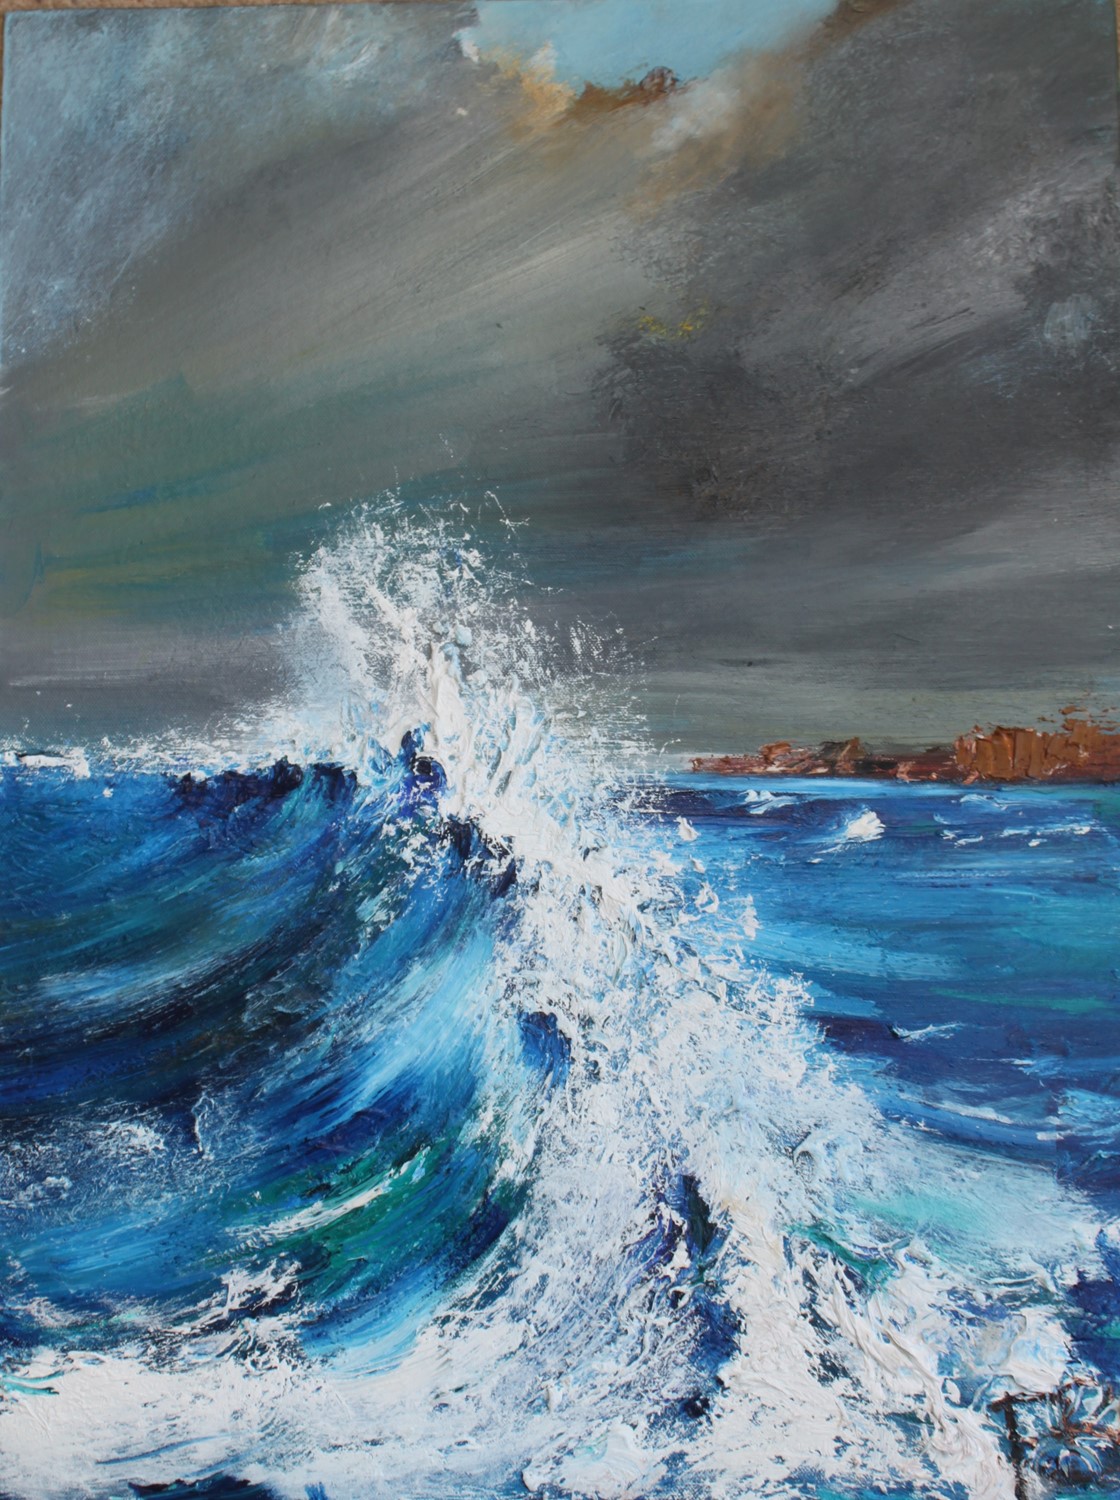 'A Wild wave' by artist Rosanne Barr